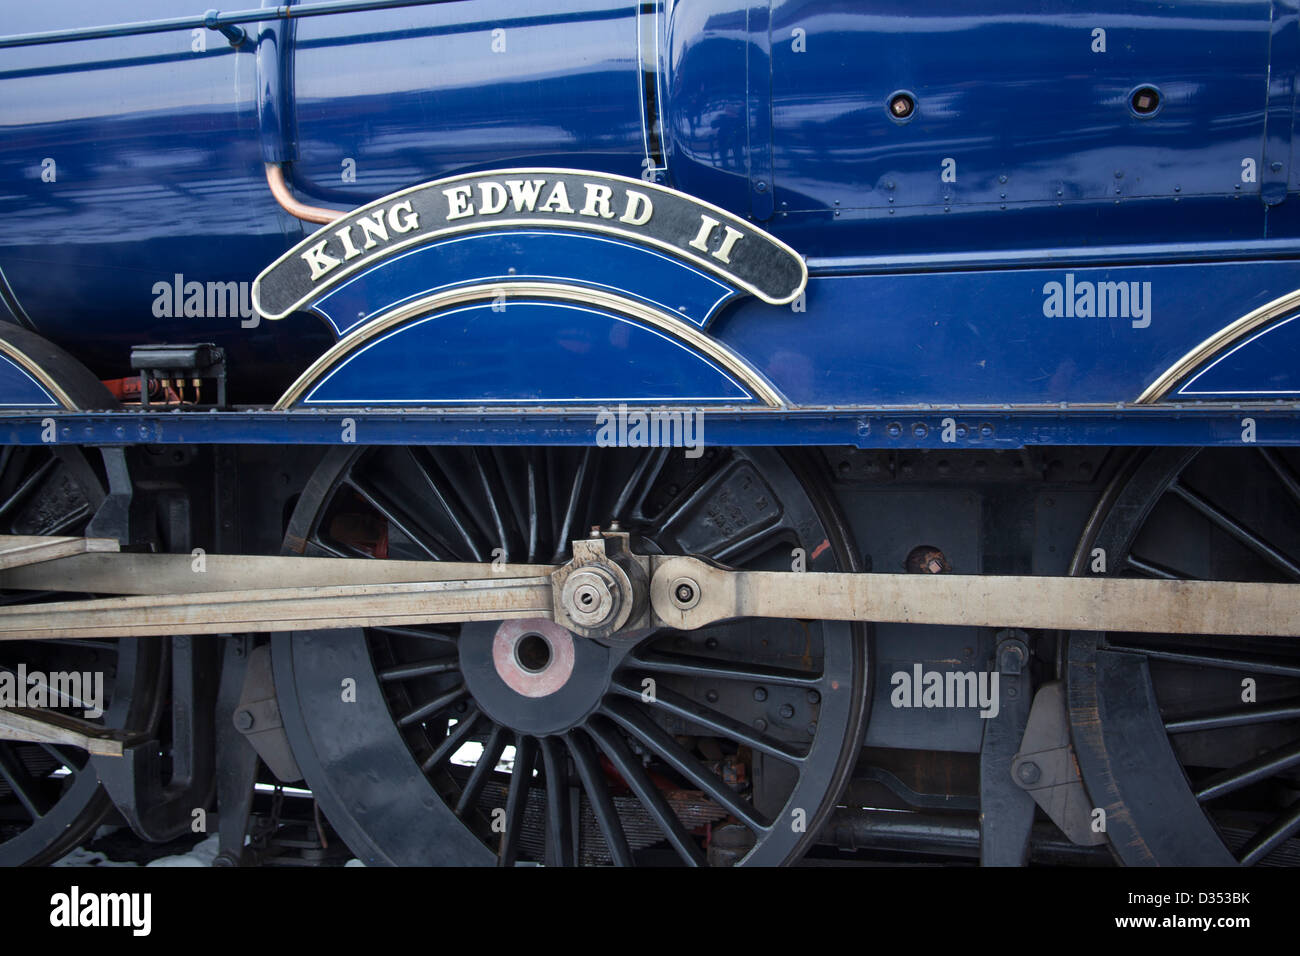 steam locomotive name plate King Edward 11 Stock Photo